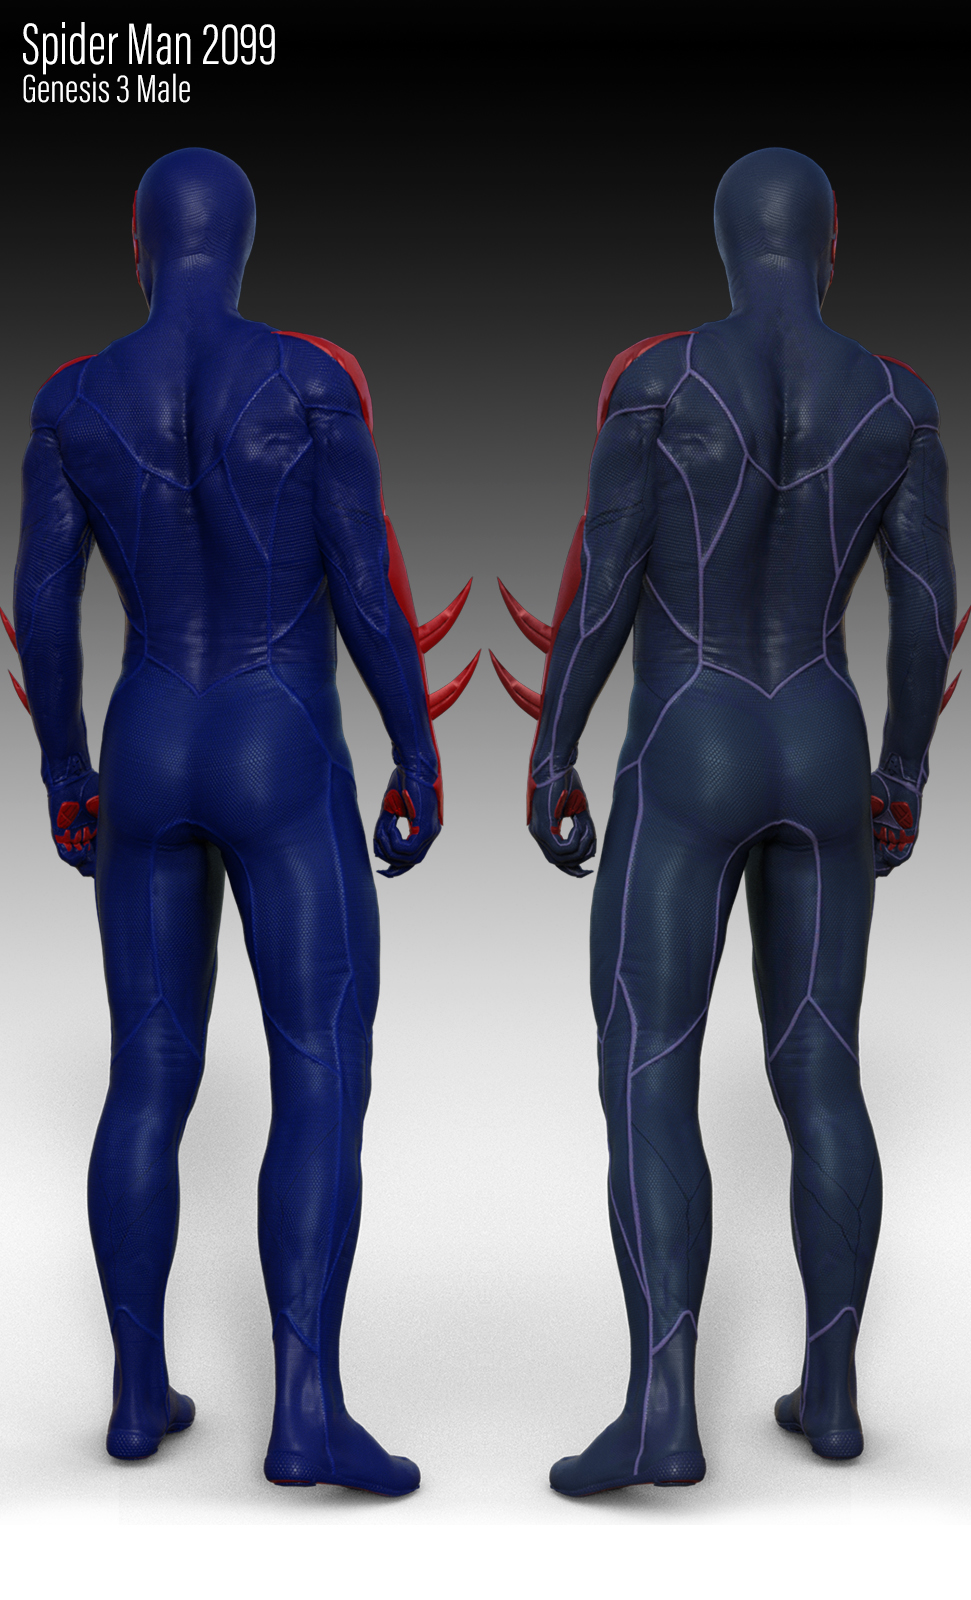 Spider Man 2099 for G3M – Renderopedia | Daz & Poser Content